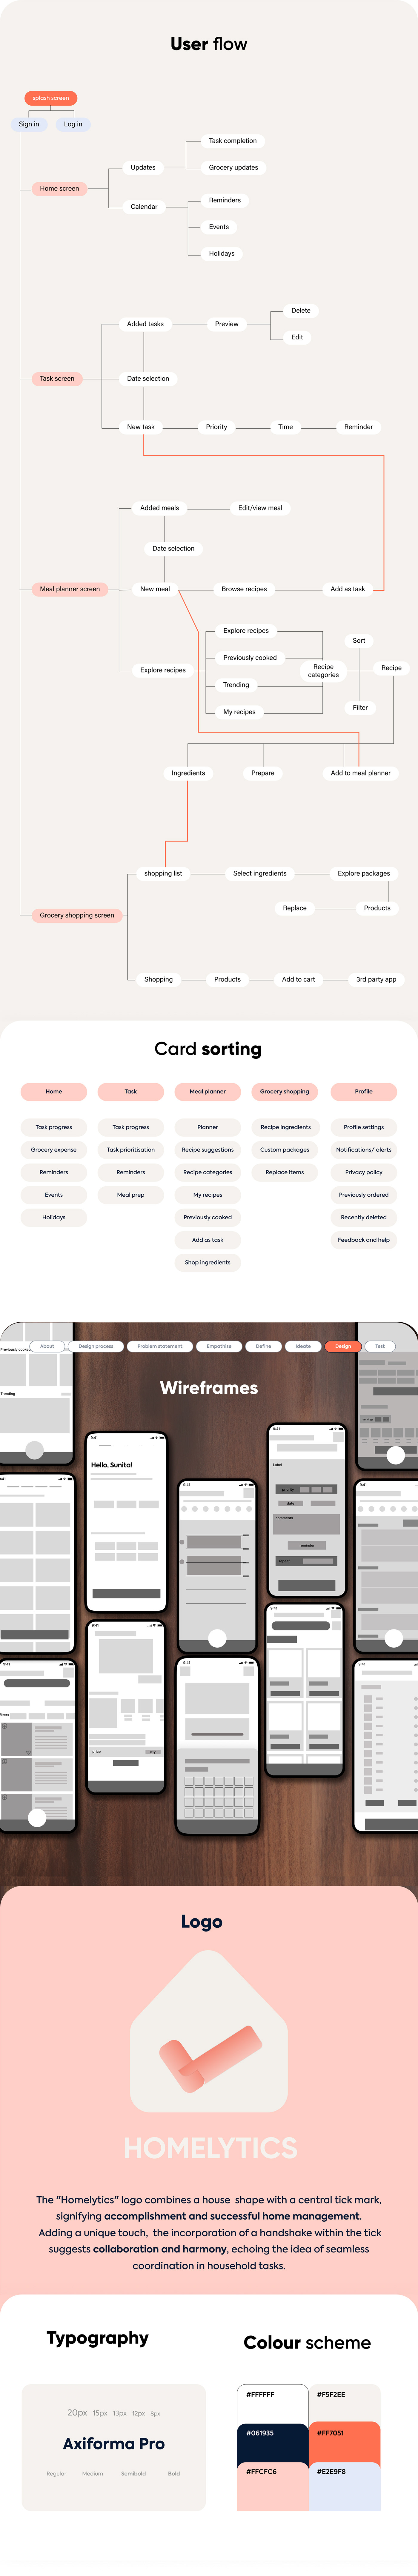 design UI/UX UX Case Study user experience Web Design  user interface Figma Mobile app User research prototype